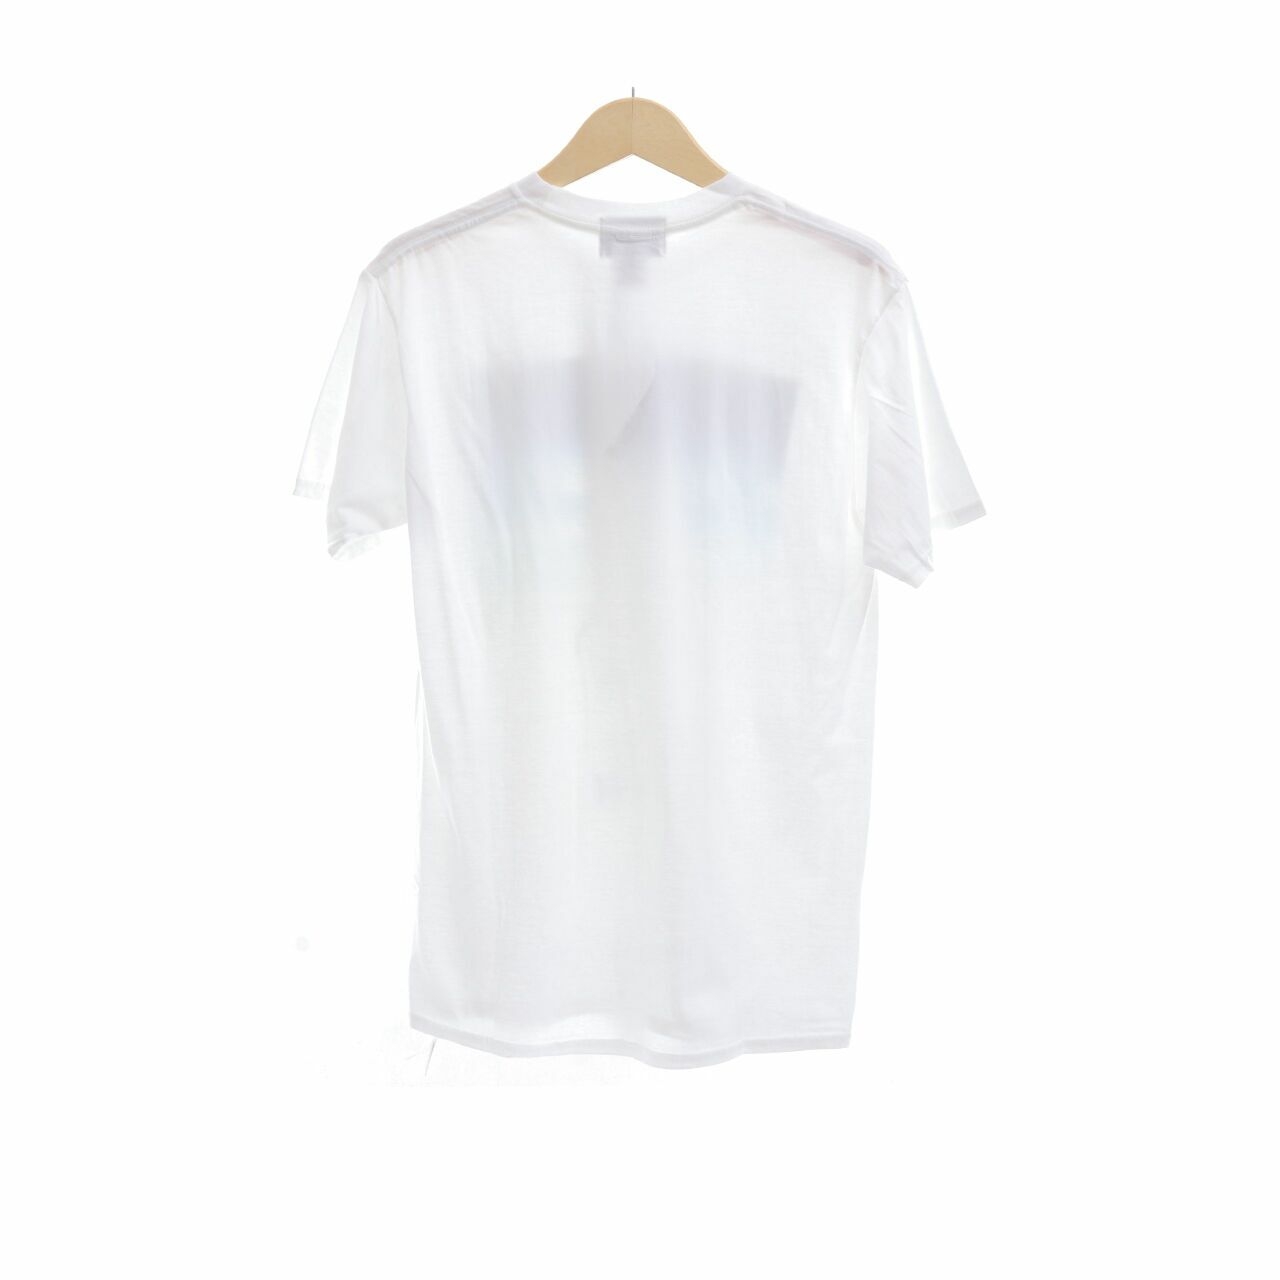 Alex[a]lexa White T-Shirt